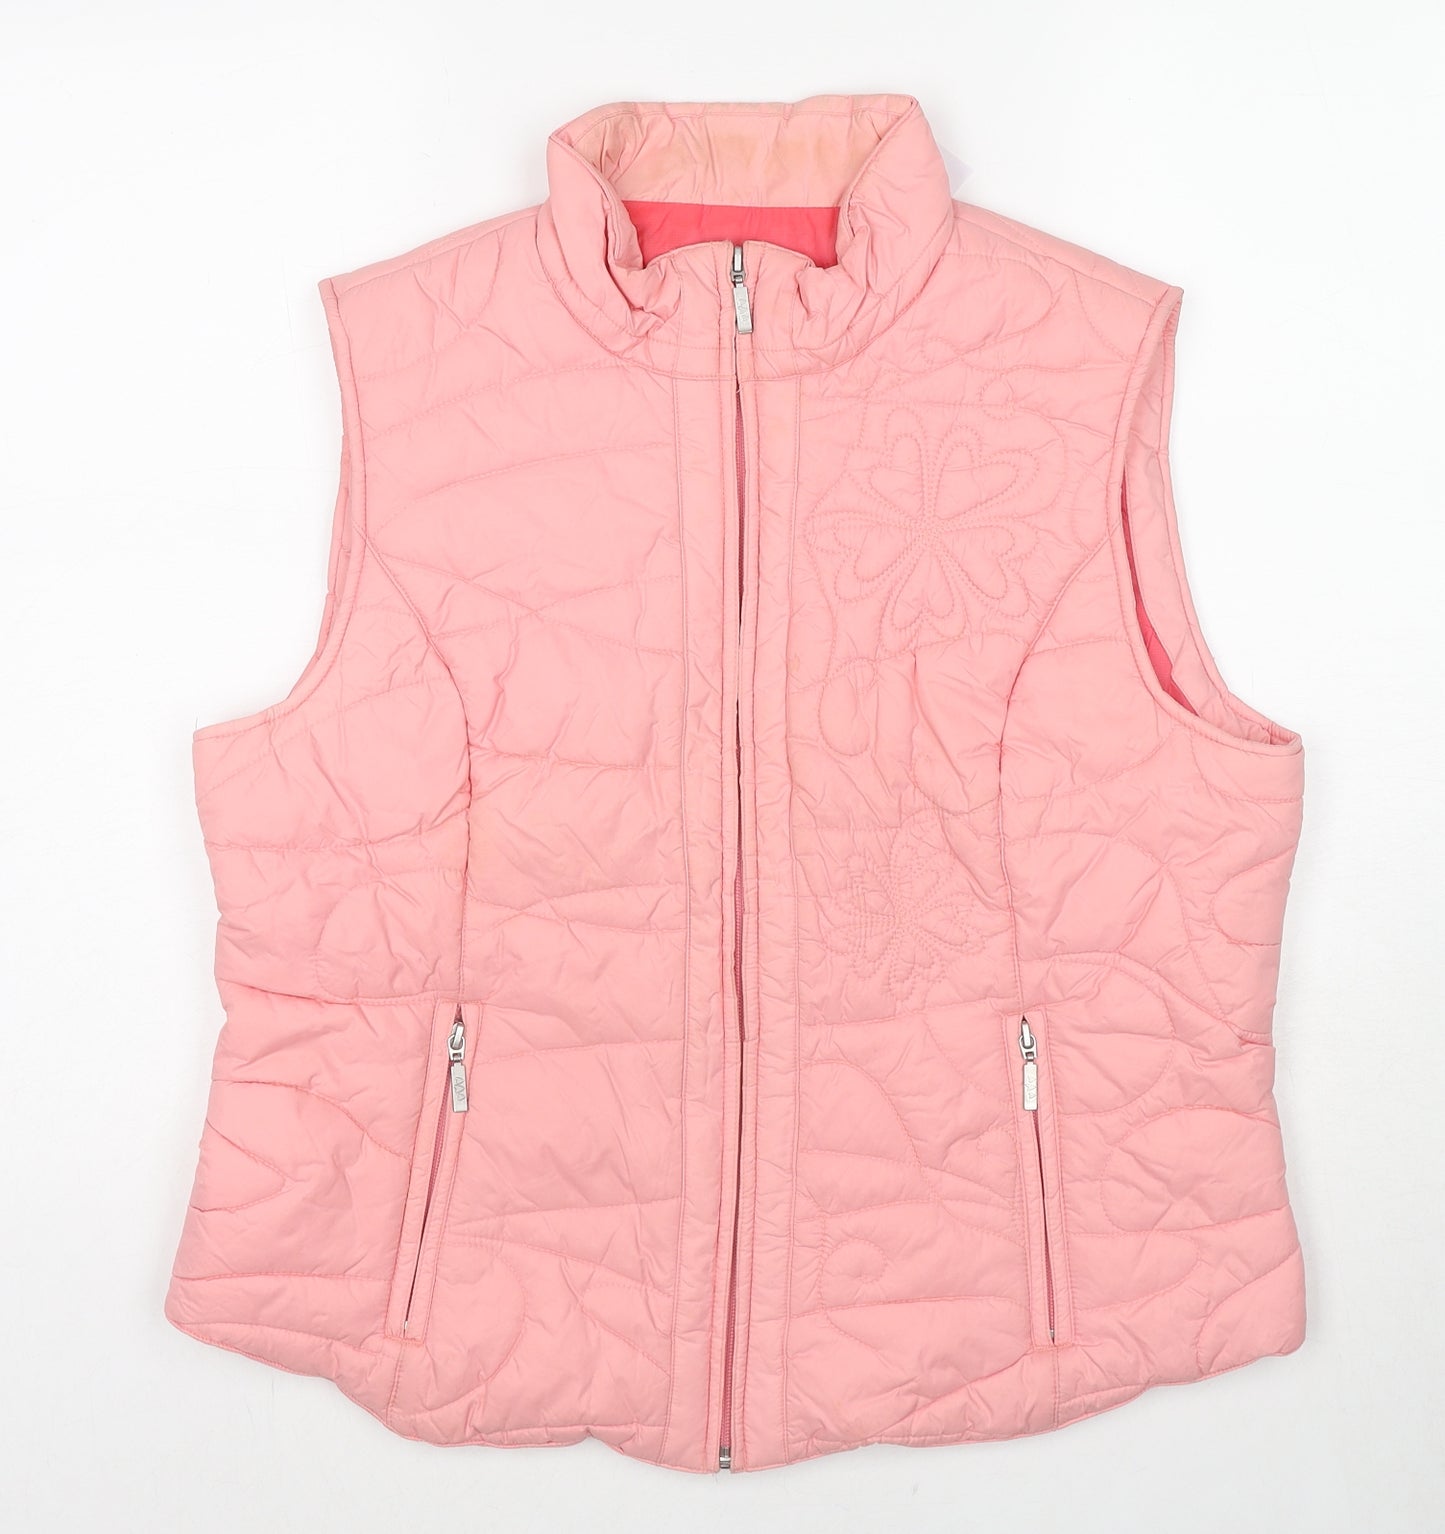 Per Una Womens Pink Gilet Jacket Size L Zip - Flower Details